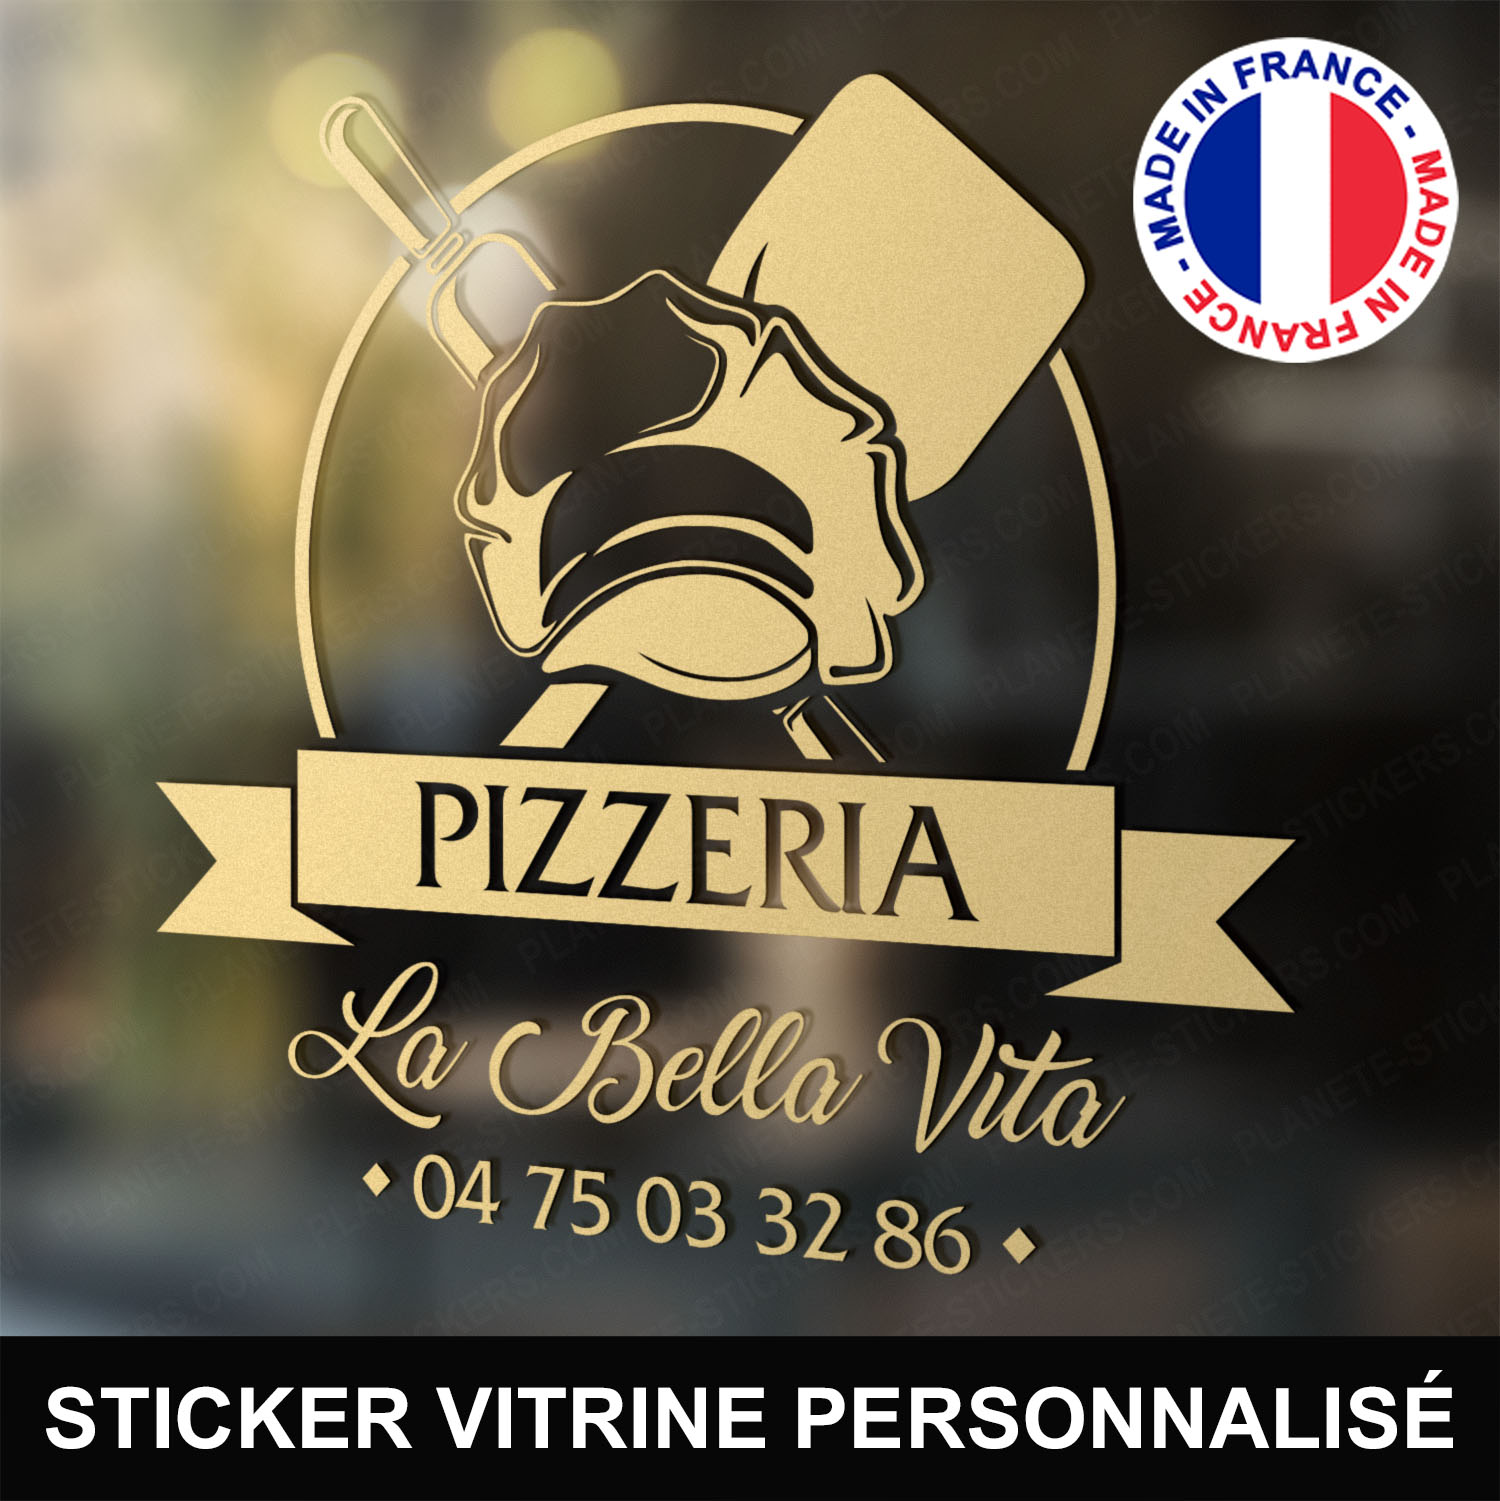 ref3pizzeriavitrine-stickers-pizzeria-vitrine-pizza-restaurant-sticker-personnalisé-autocollant-pro-restaurateur-vitre-resto-professionnel-logo-pizzeria-chef